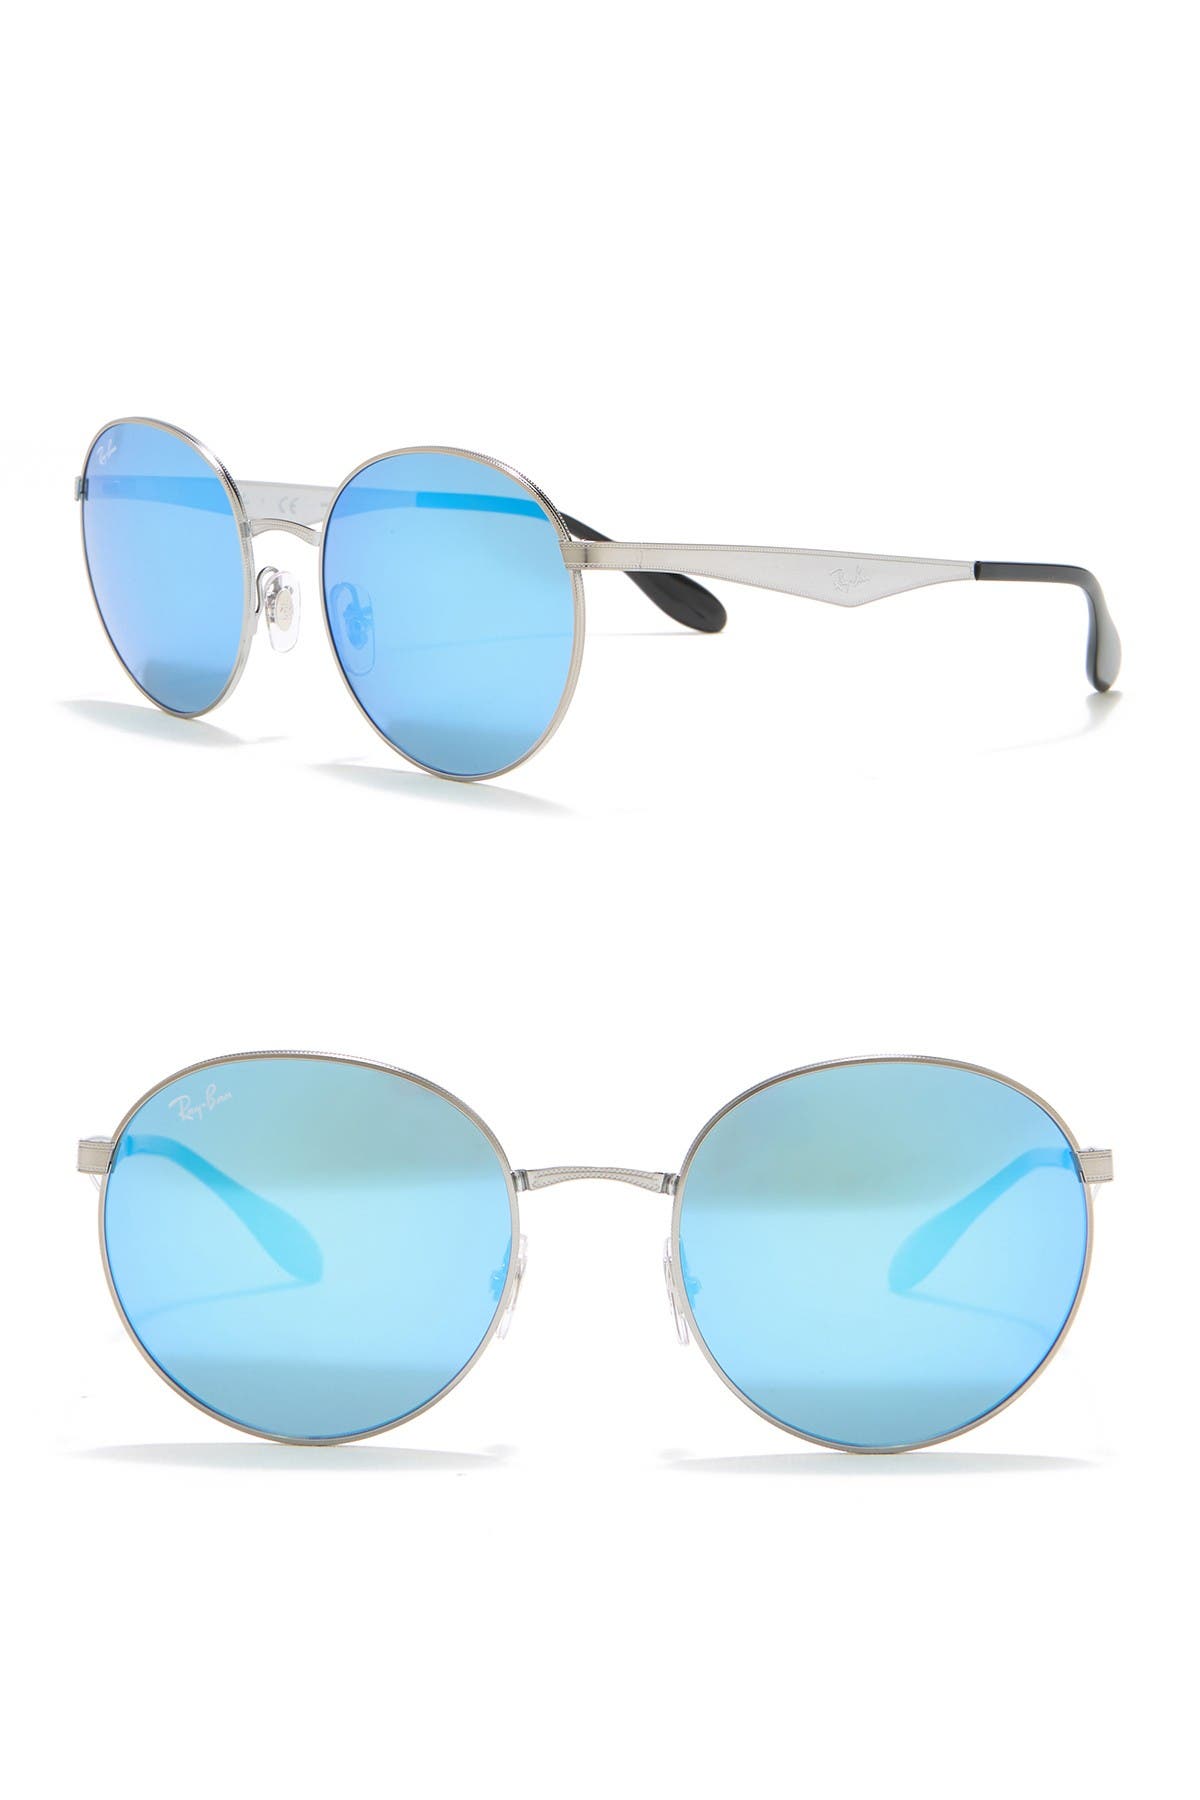 ray ban highstreet 51mm round sunglasses